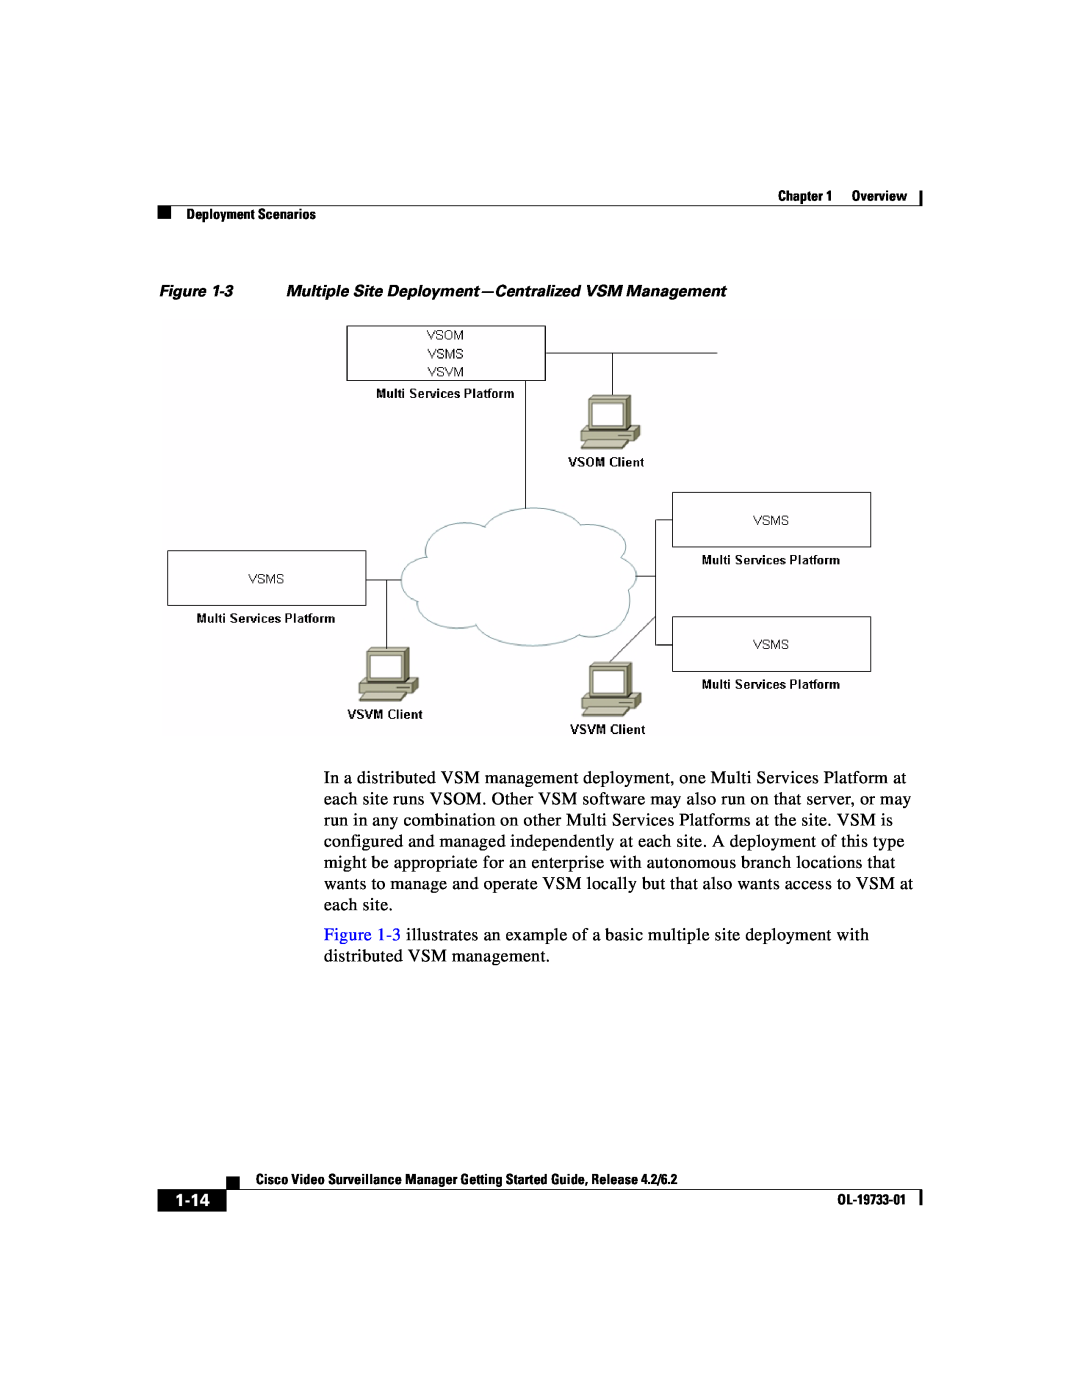 Cisco Systems Release 4.2 manual 1-14, 3 Multiple Site Deployment-Centralized VSM Management 